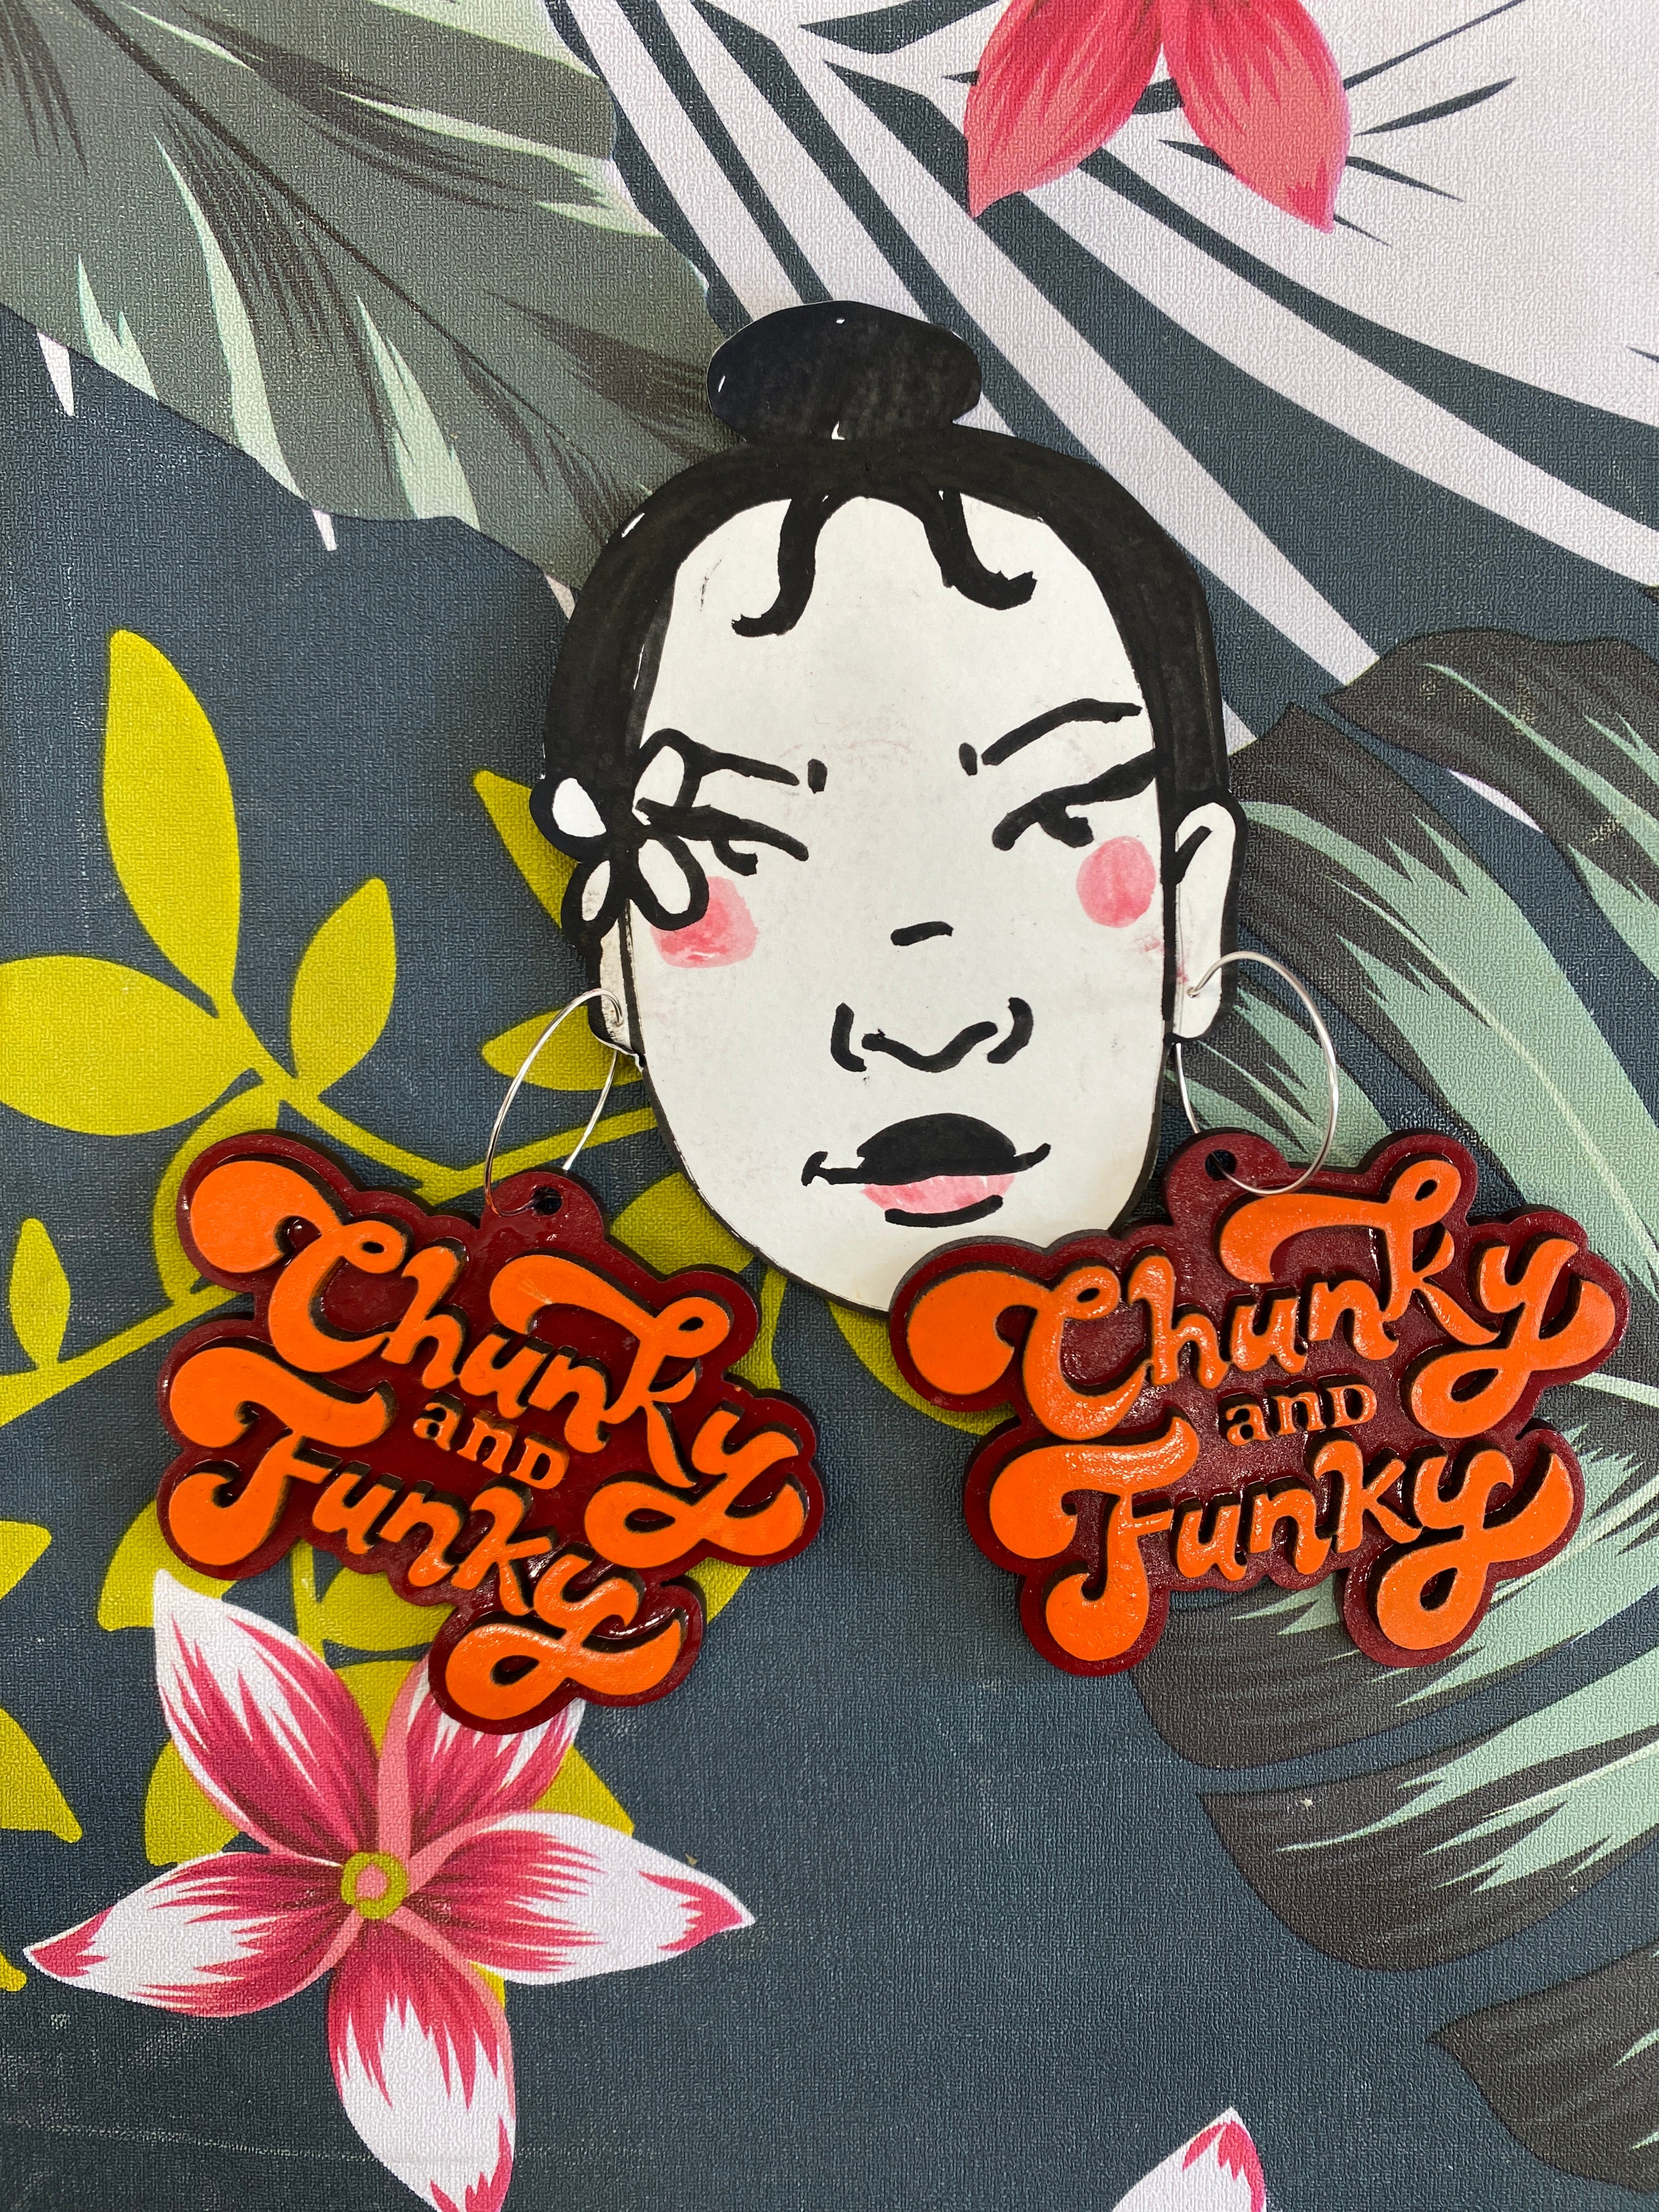 Chunky and Funky - earrings by Kophie Su'a-Hulsbosch